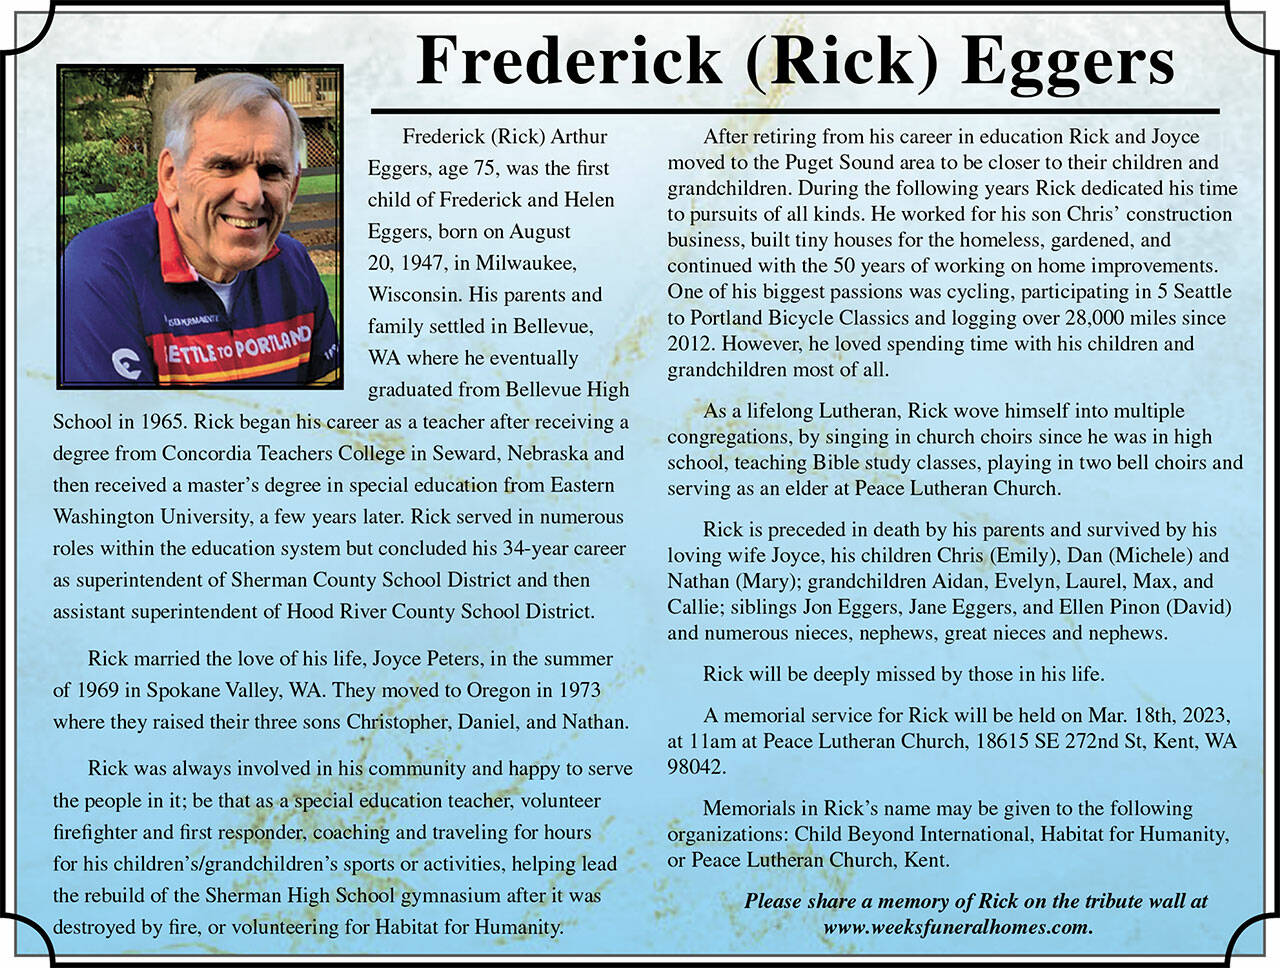 Fredrick Eggers